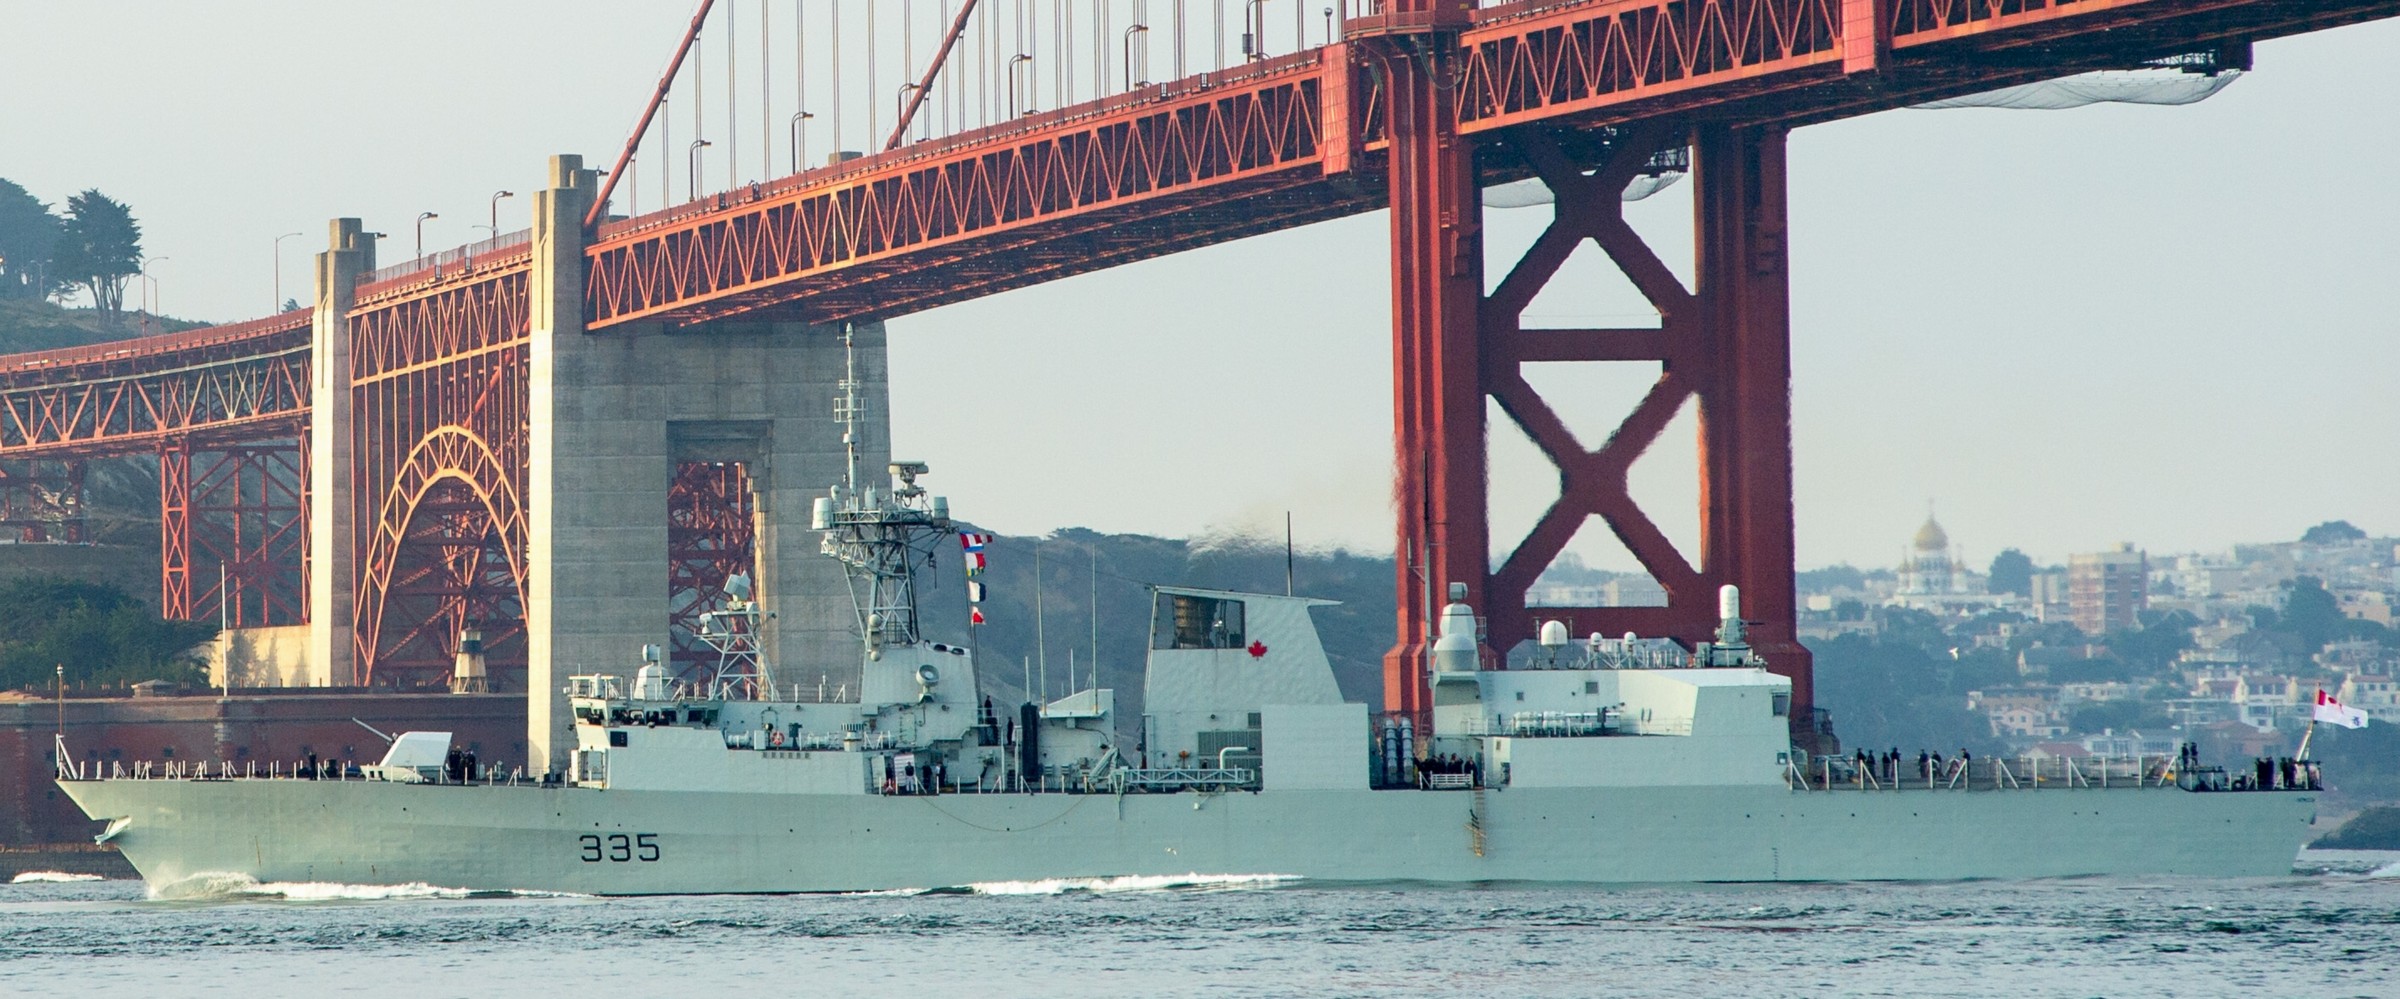 ffh-335 hmcs calgary halifax class helicopter patrol frigate ncsm royal canadian navy 15 san francisco fleet week